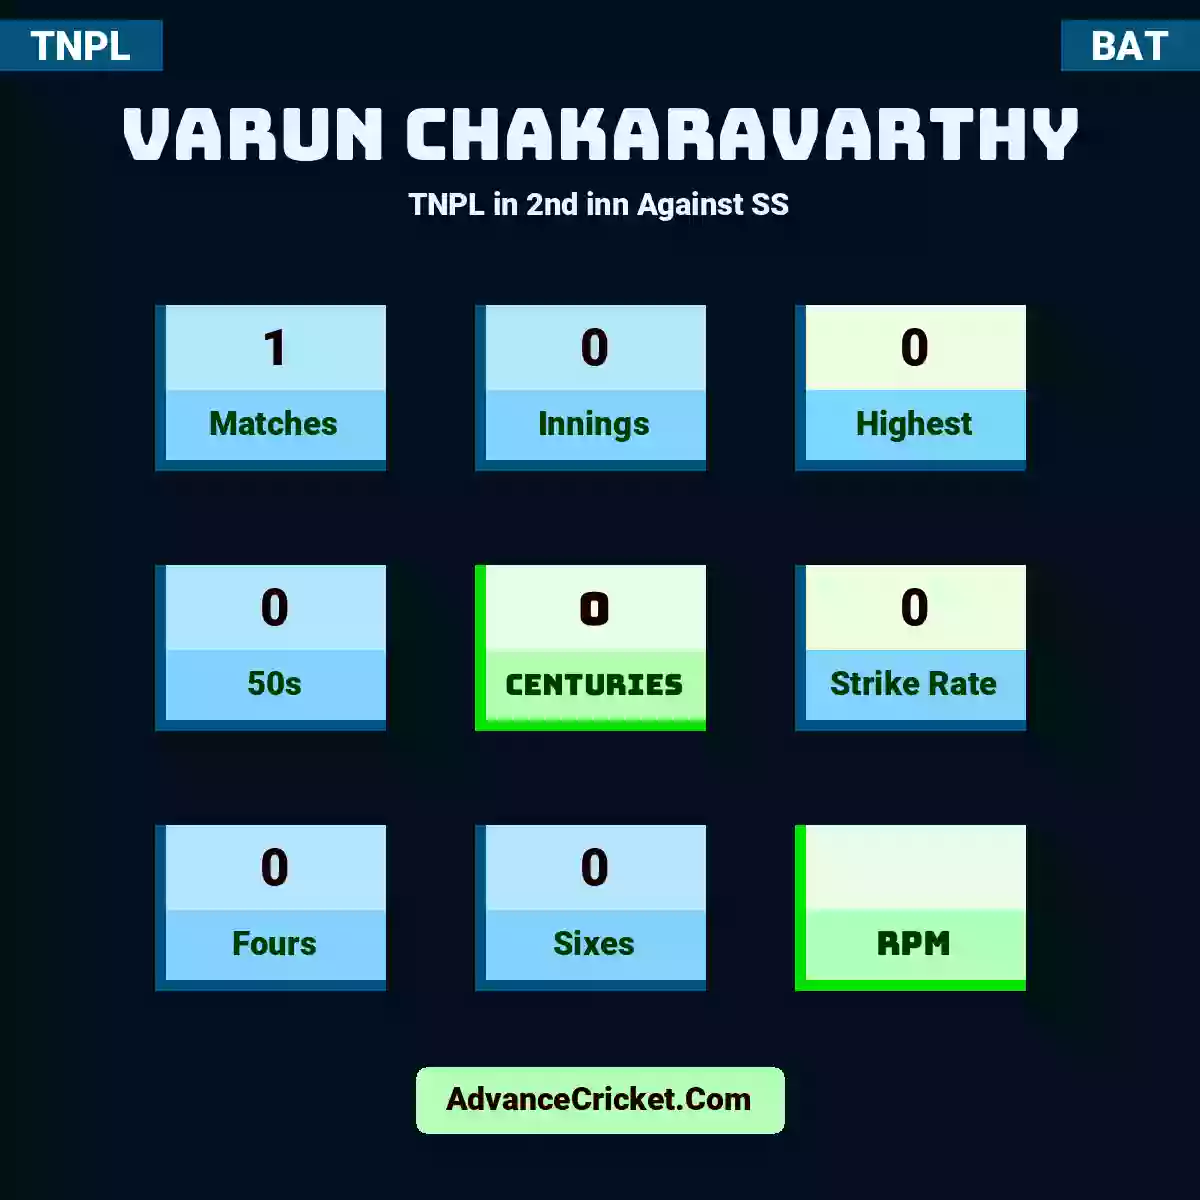 Varun Chakaravarthy TNPL  in 2nd inn Against SS, Varun Chakaravarthy played 1 matches, scored 0 runs as highest, 0 half-centuries, and 0 centuries, with a strike rate of 0. V.Chakaravarthy hit 0 fours and 0 sixes.